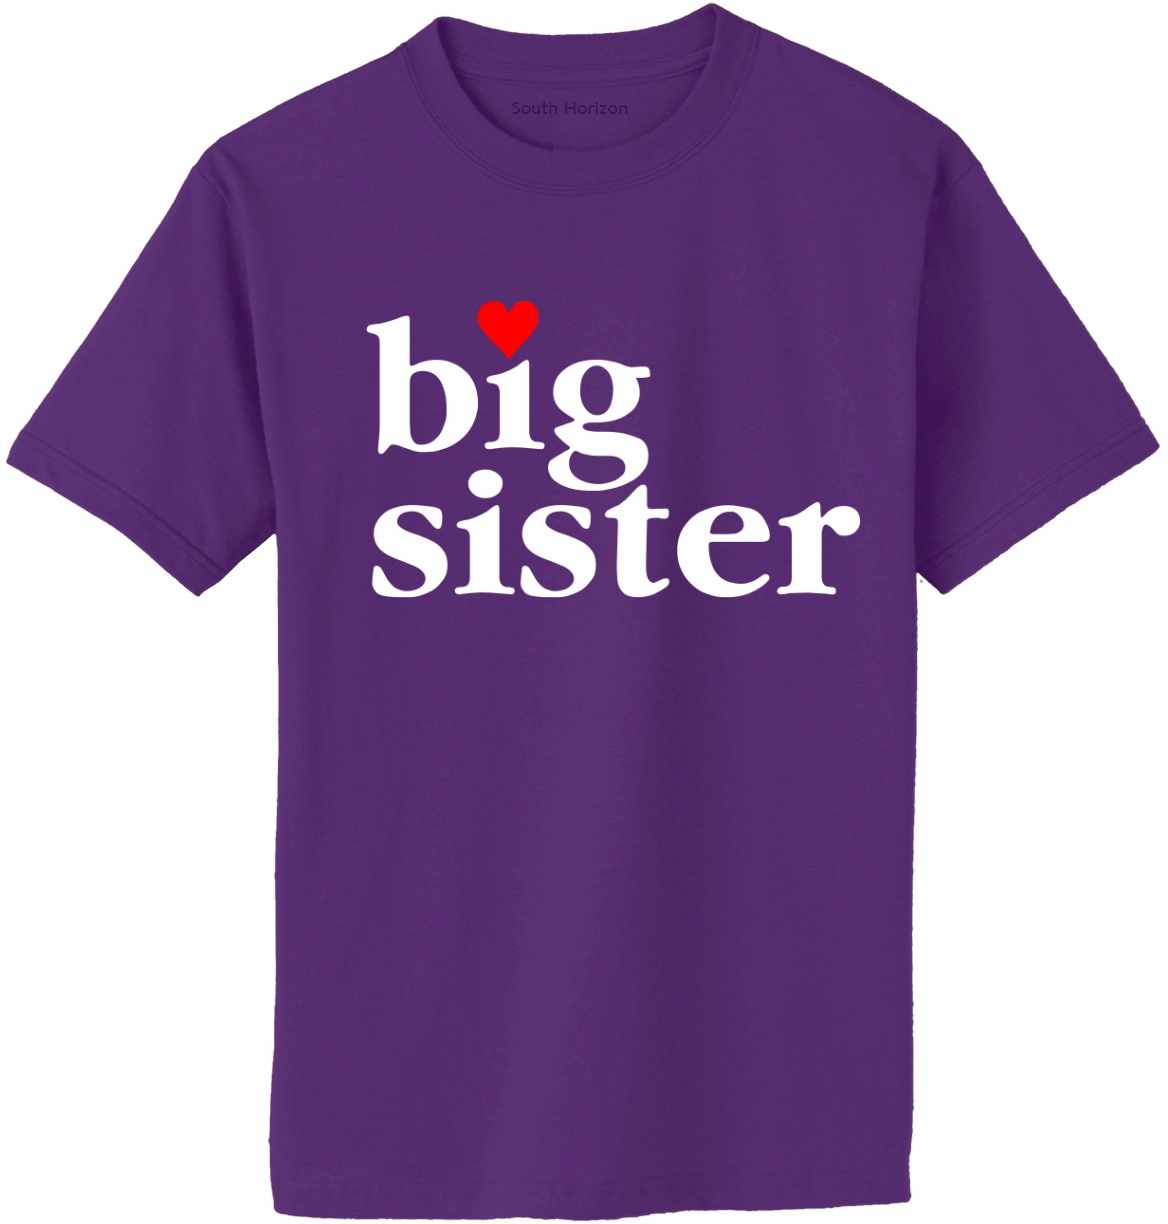 Big Sister Adult T-Shirt